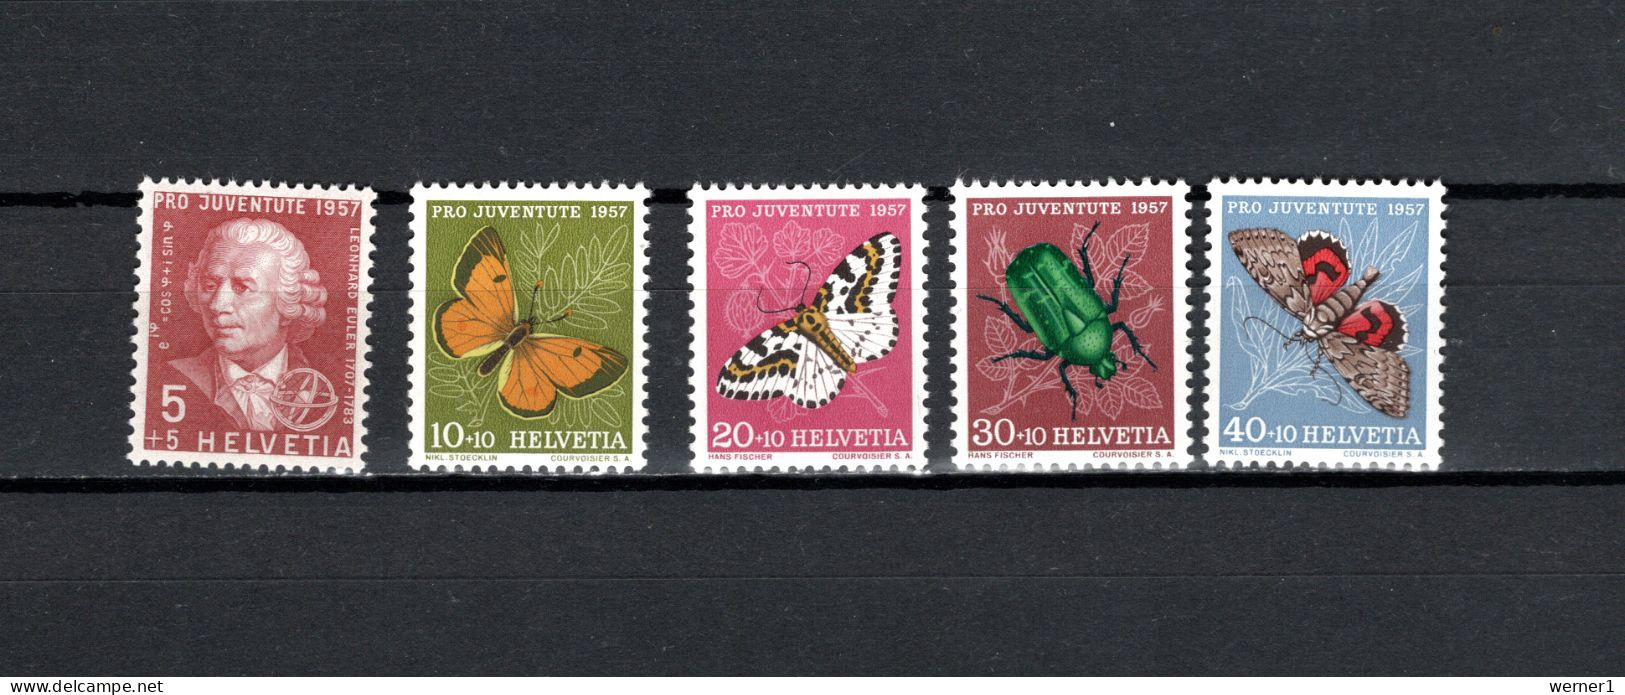 Switzerland 1957 Space, Leonhard Euler 250th Birthday Anniv., Butterflies Set Of 5 MNH - Europa